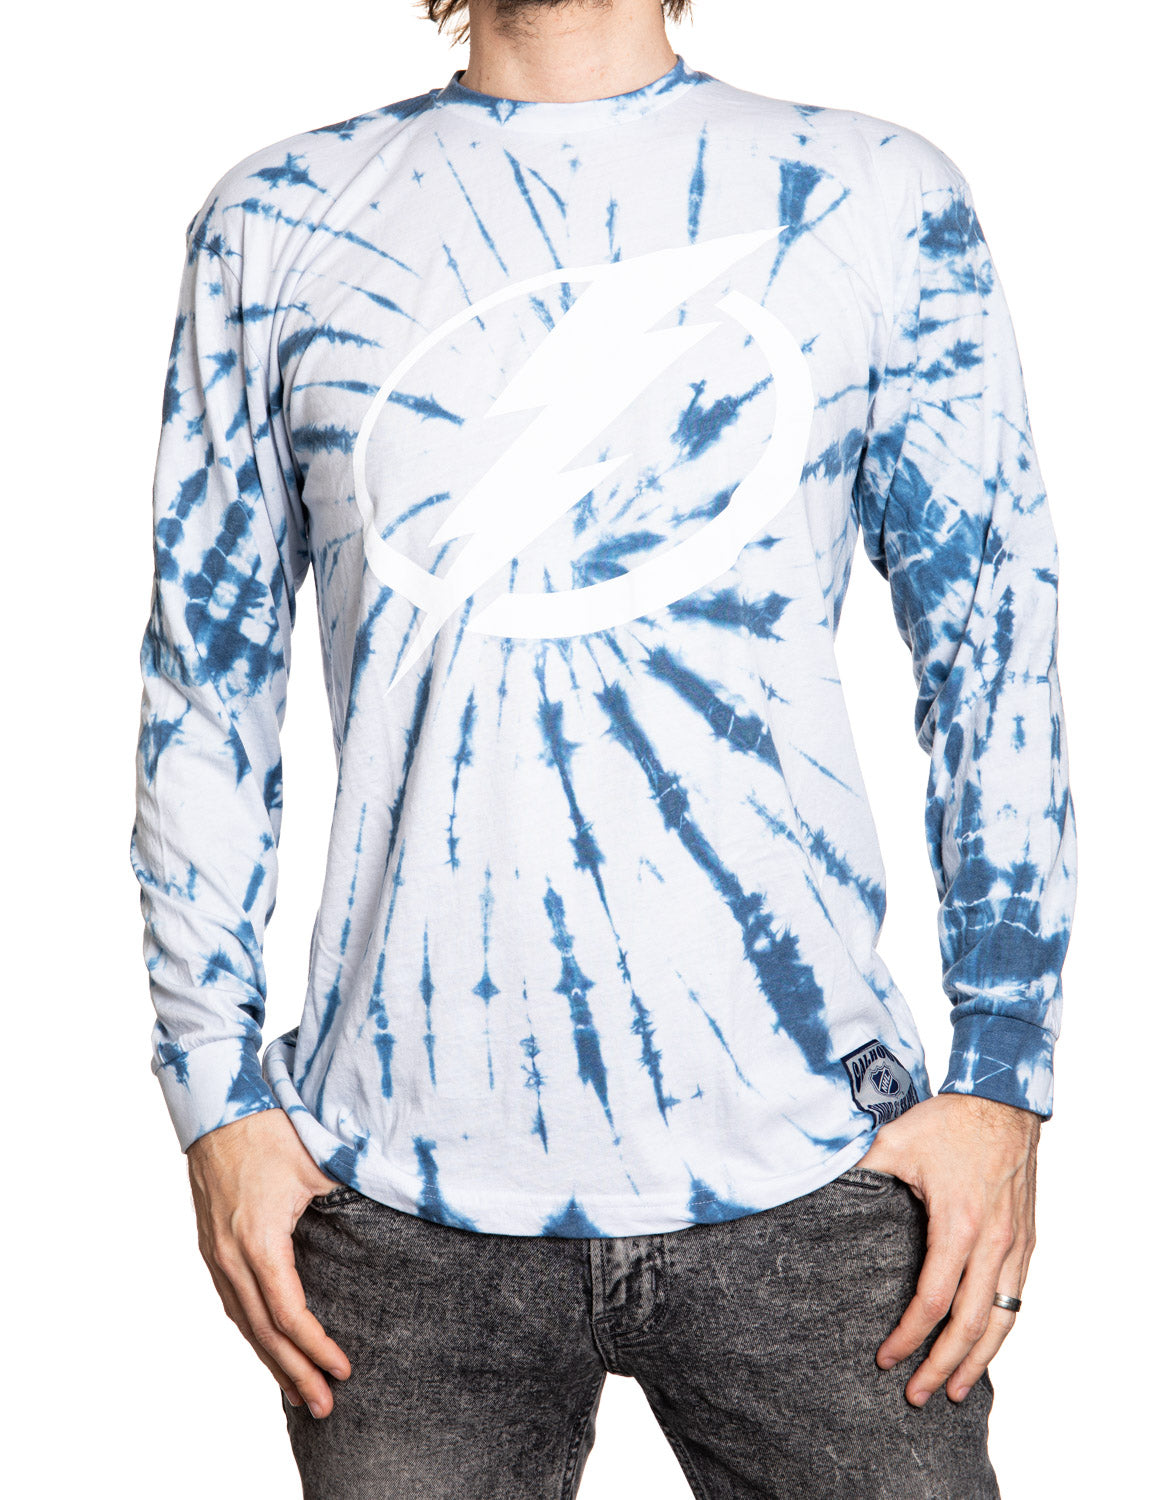 Tampa Bay Lightning Spiral Tie Dye Longsleeve Shirt